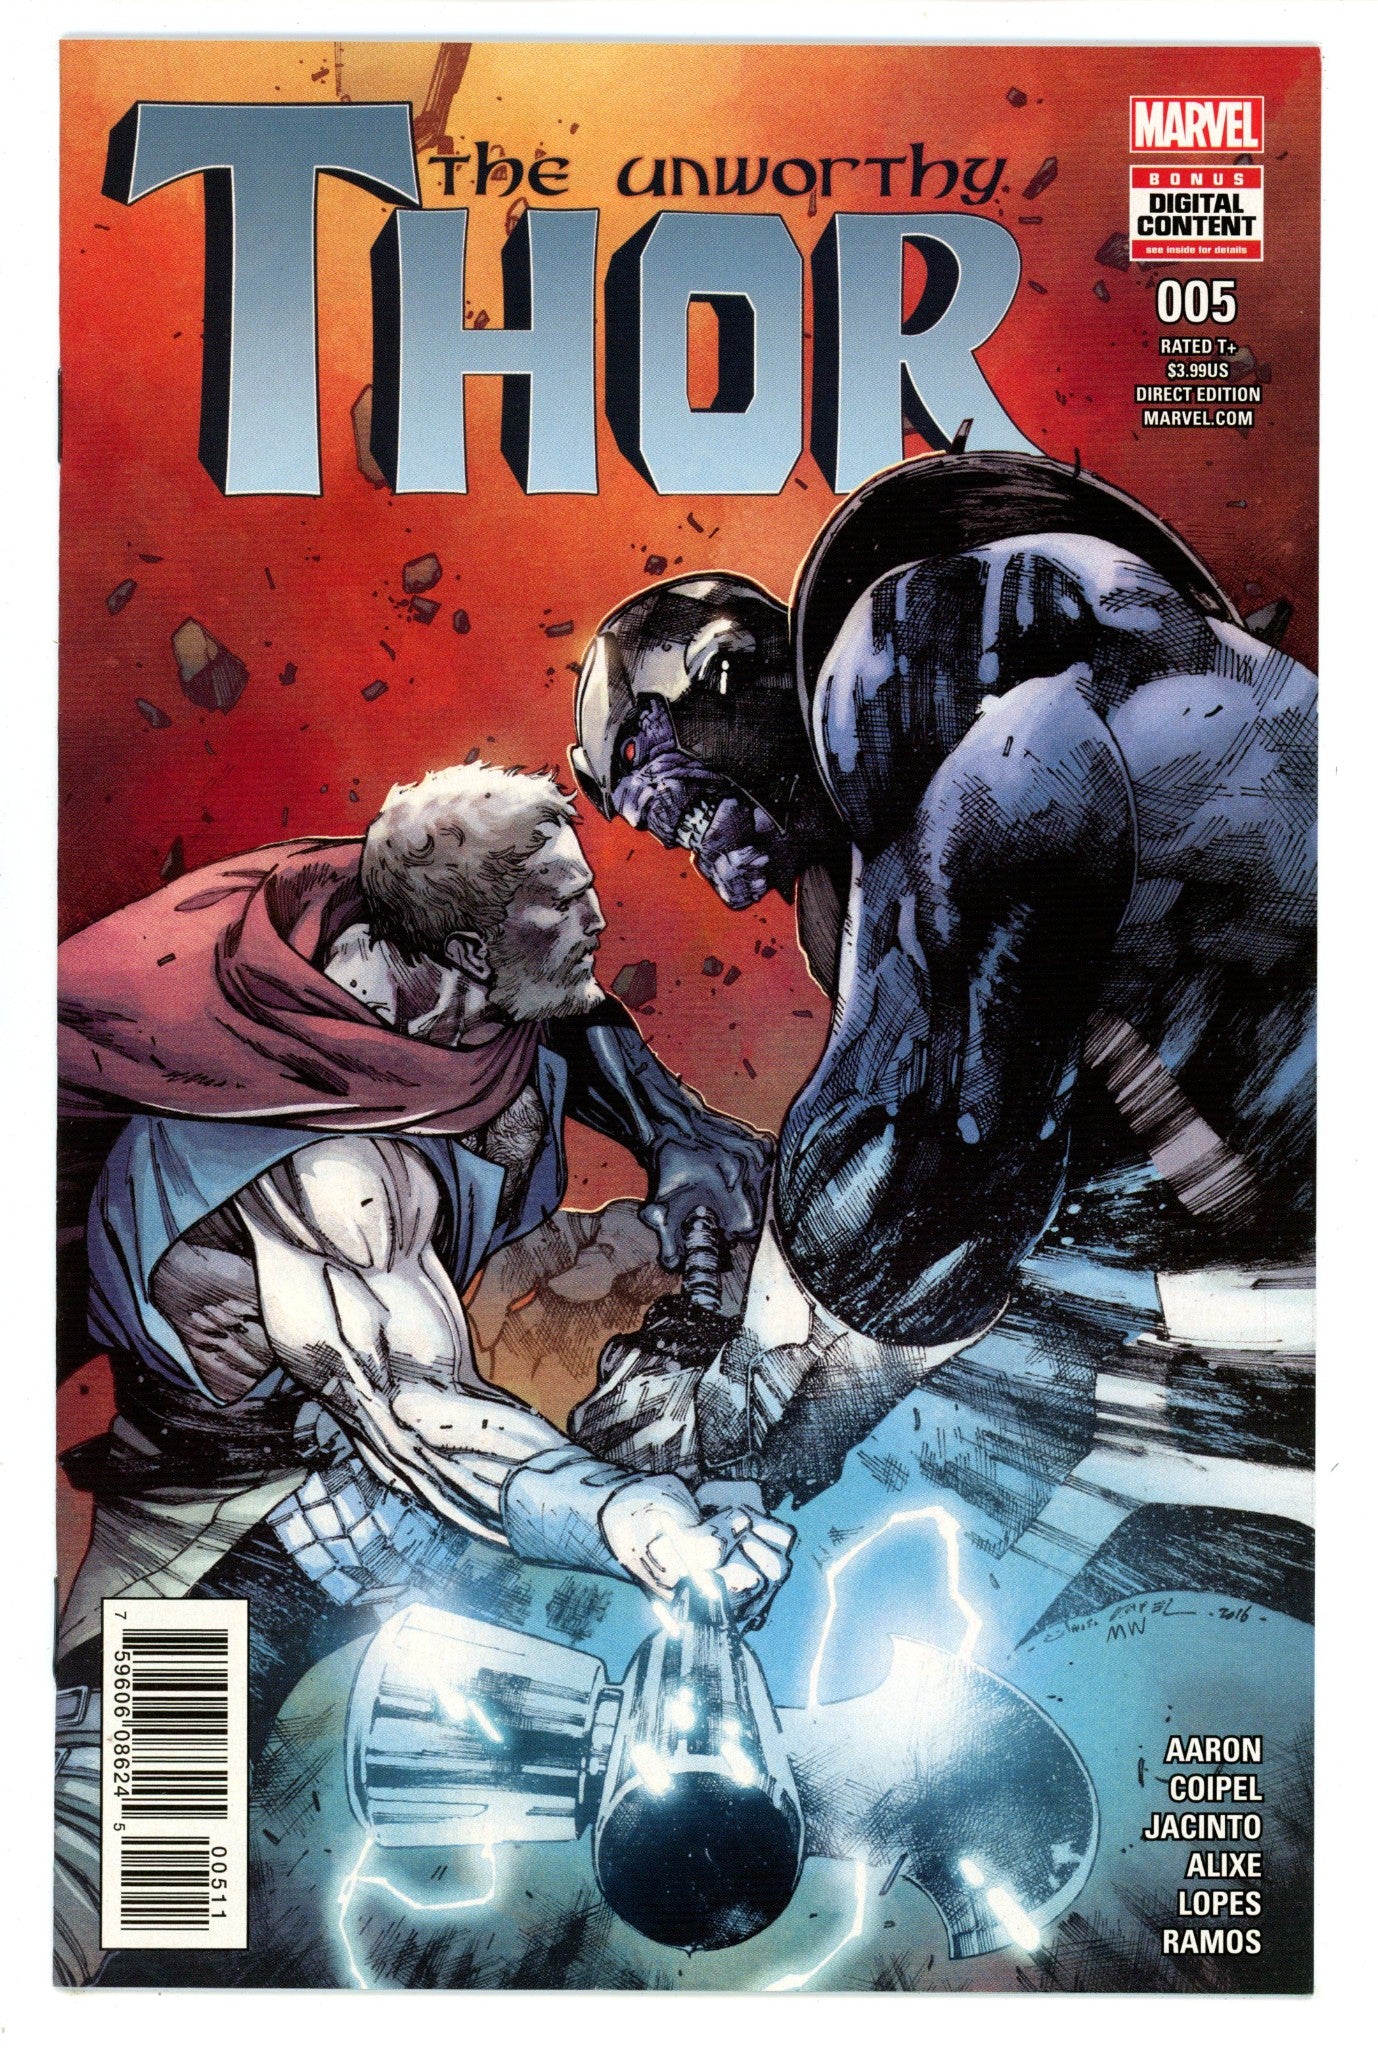 The Unworthy Thor Vol 1 5 High Grade (2017) 